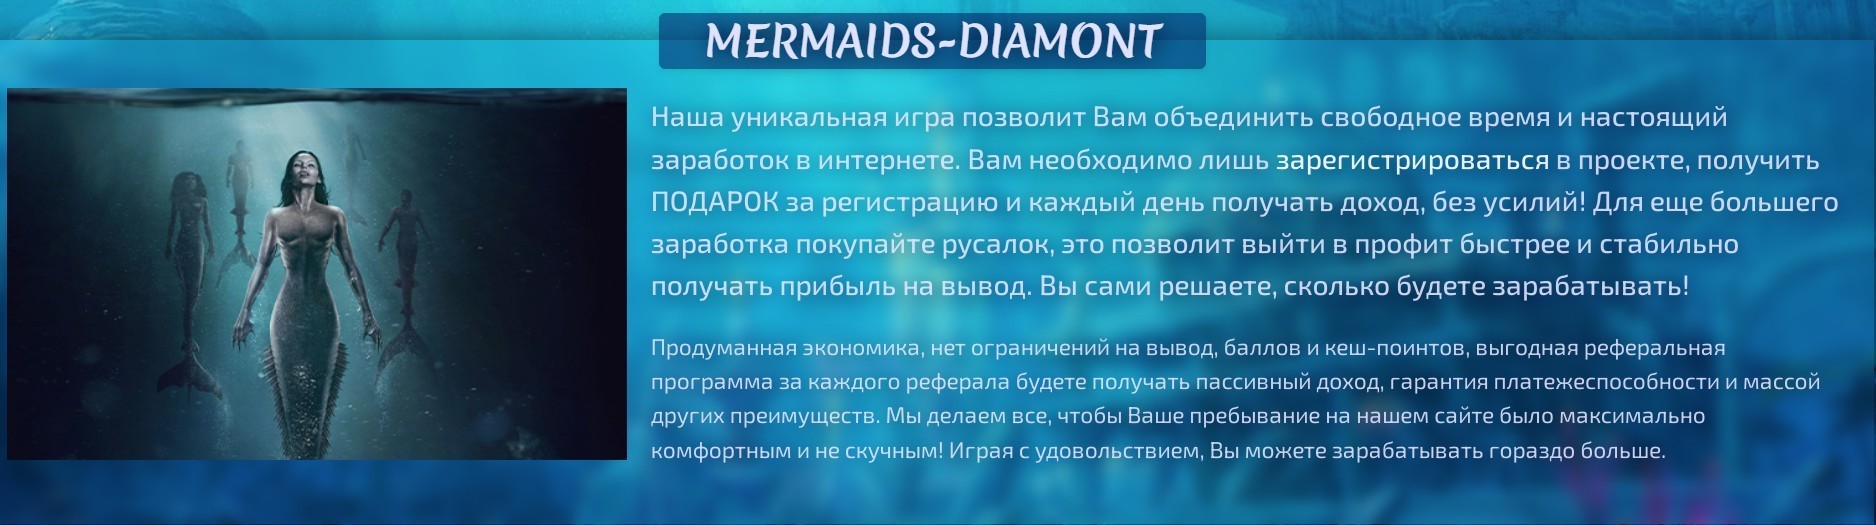 Онлайн игра Mermaids-diamont обзор